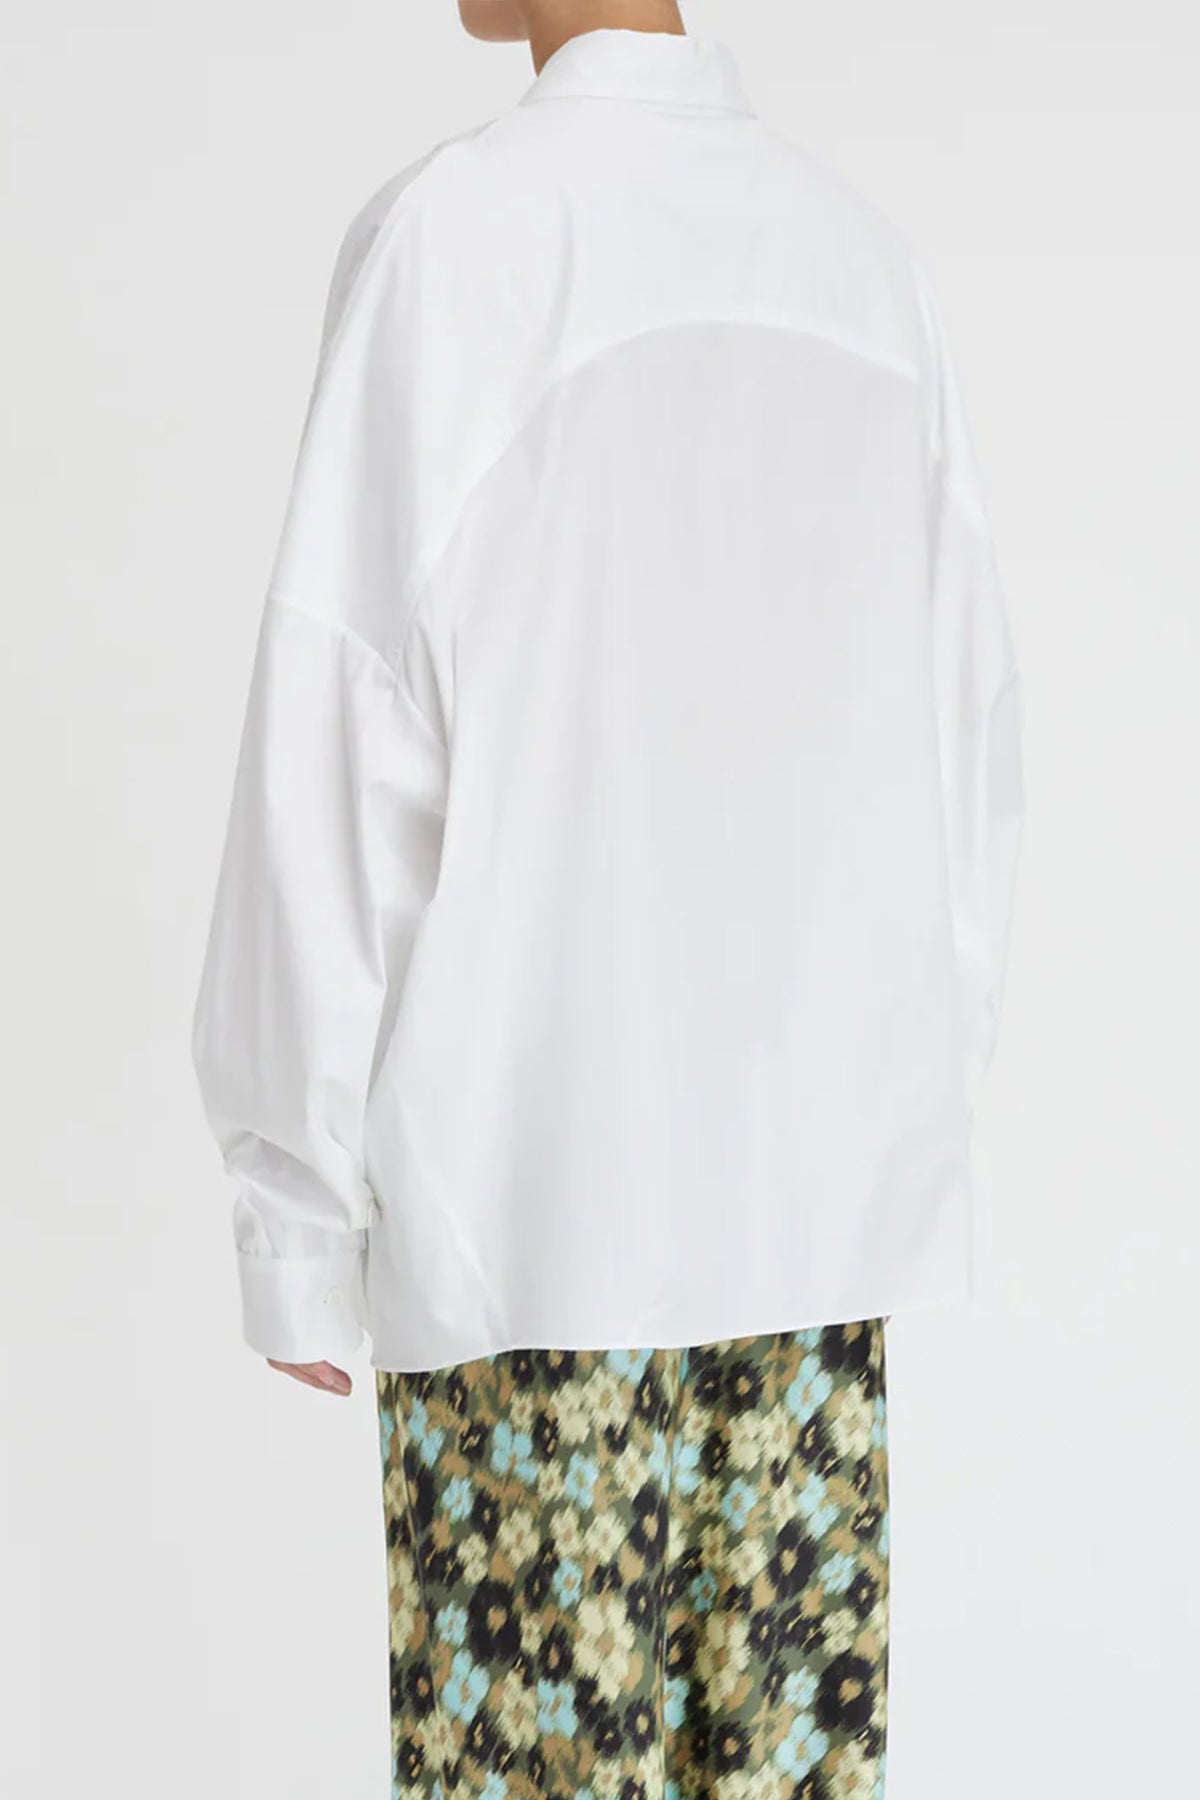 Tate Wrap Shirt in White - shop-olivia.com